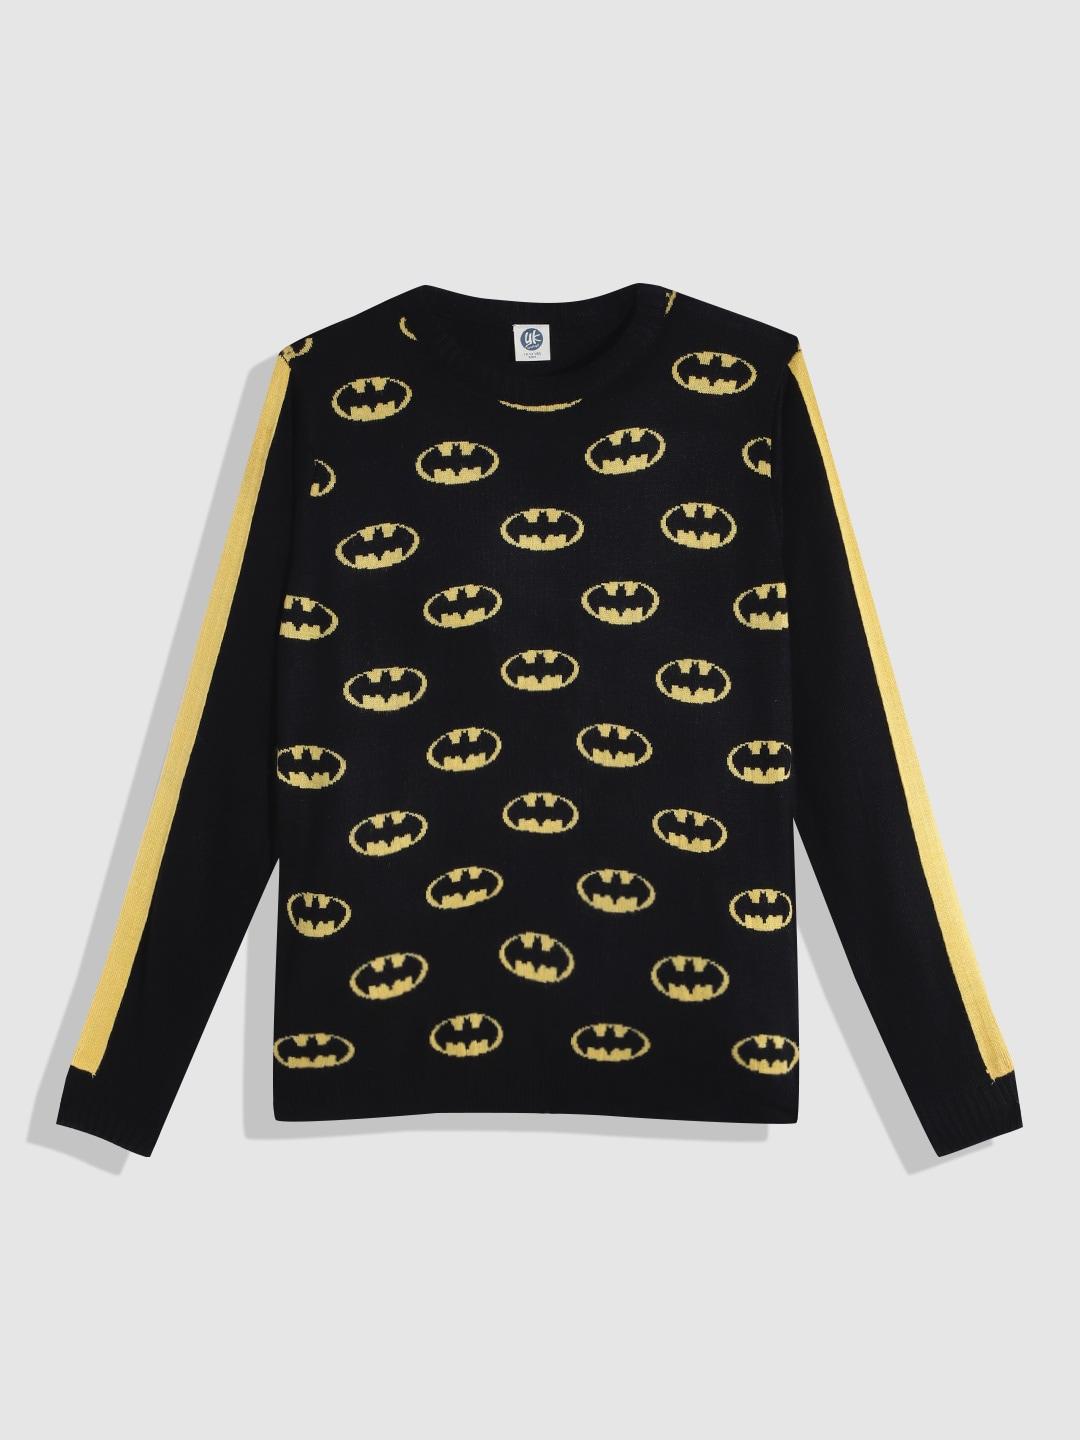 YK Justice League Boys Black & Yellow Batman Printed Pullover